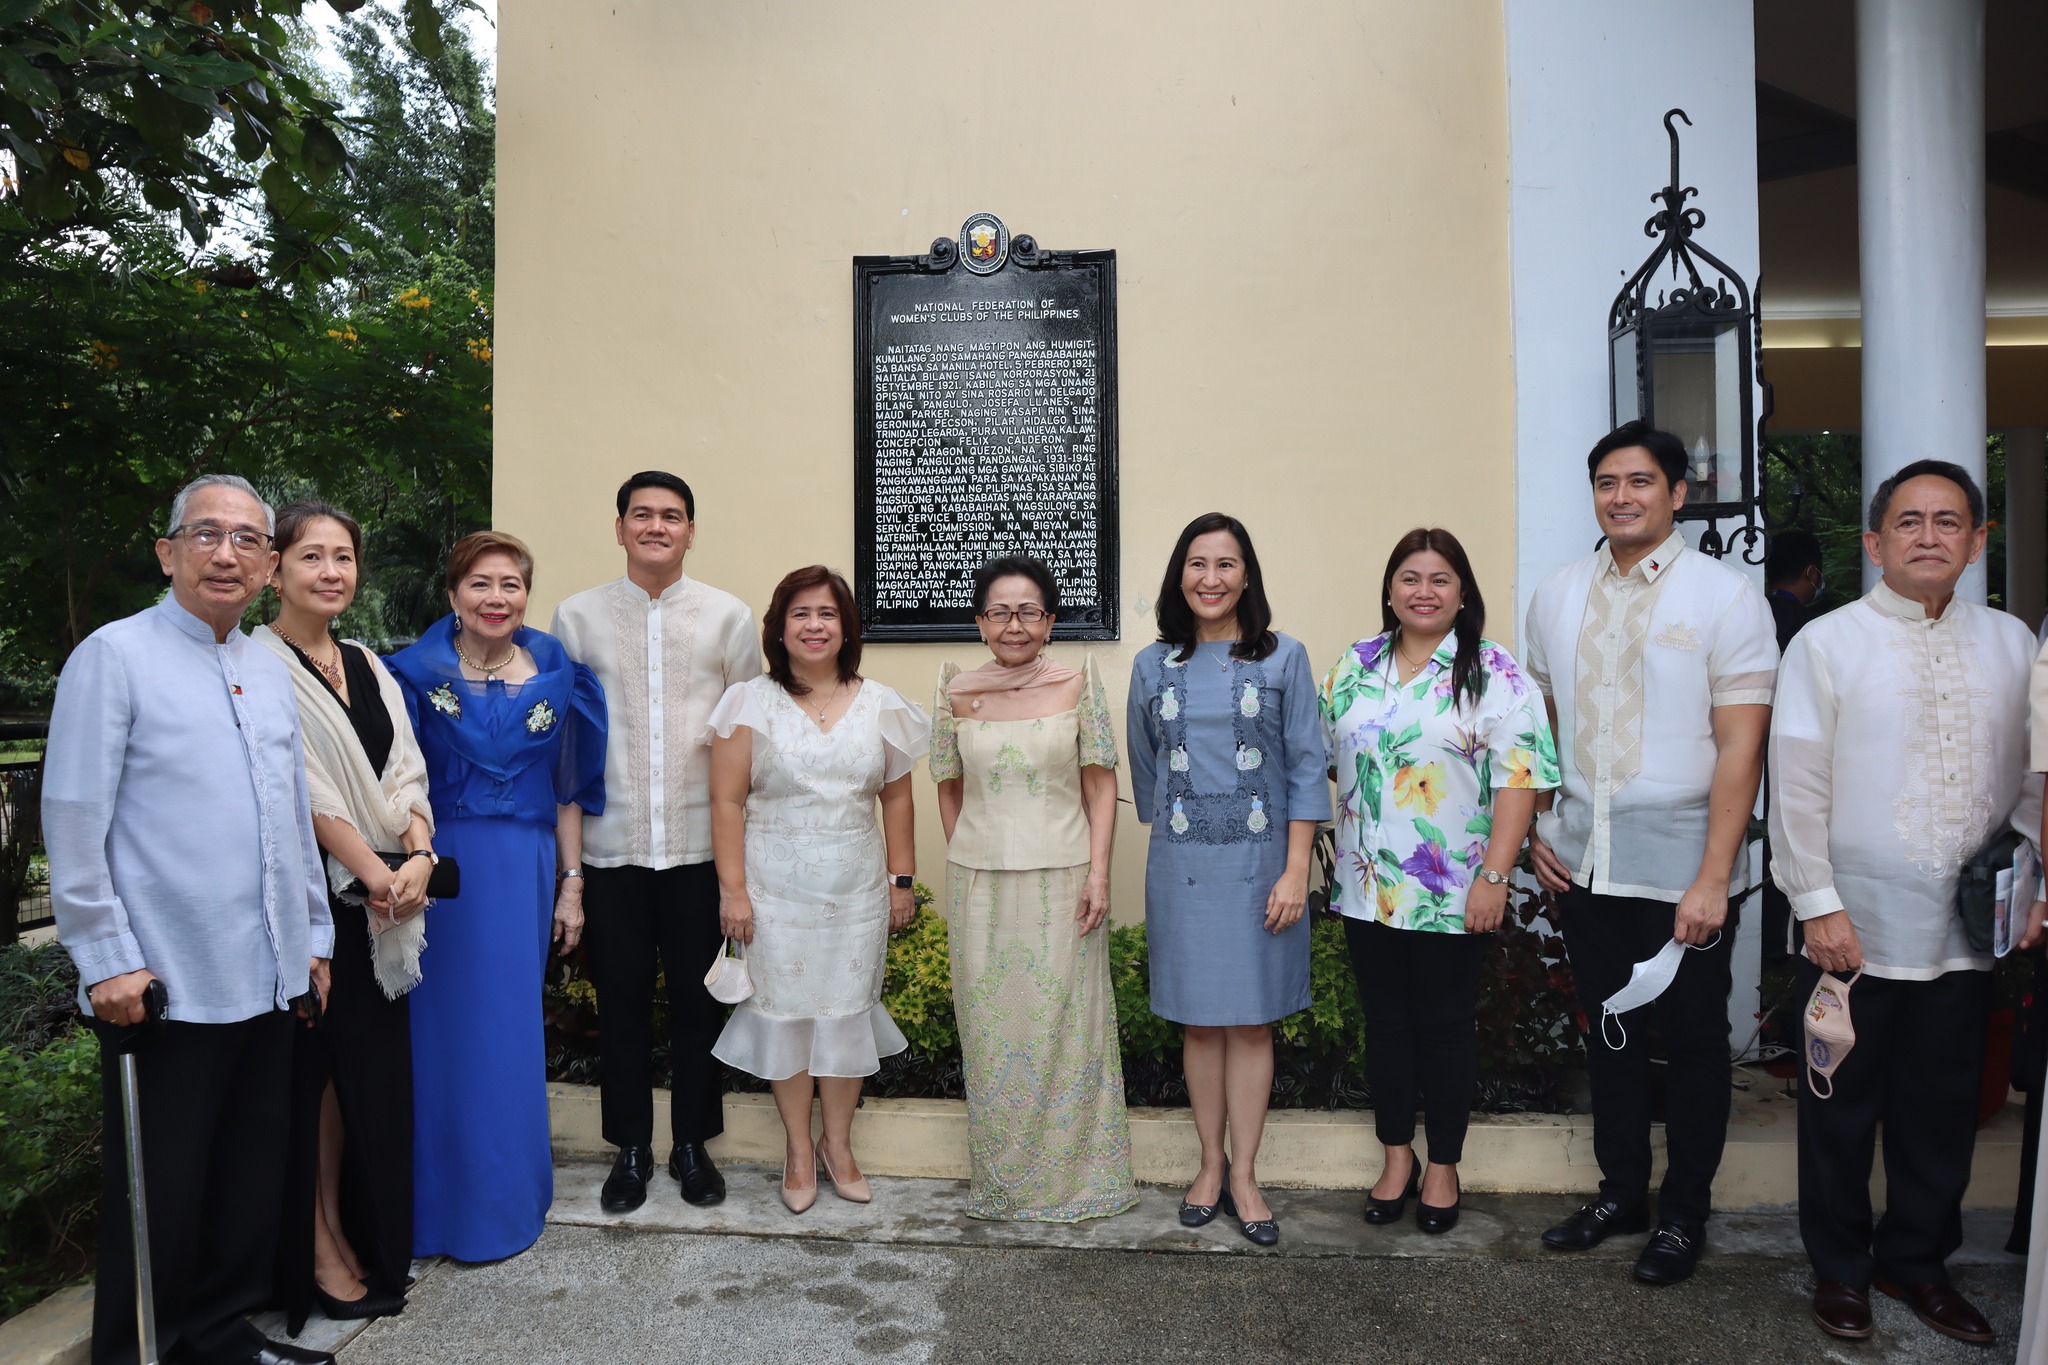 NFWC Philippines Marker Installed in Quezon Memorial